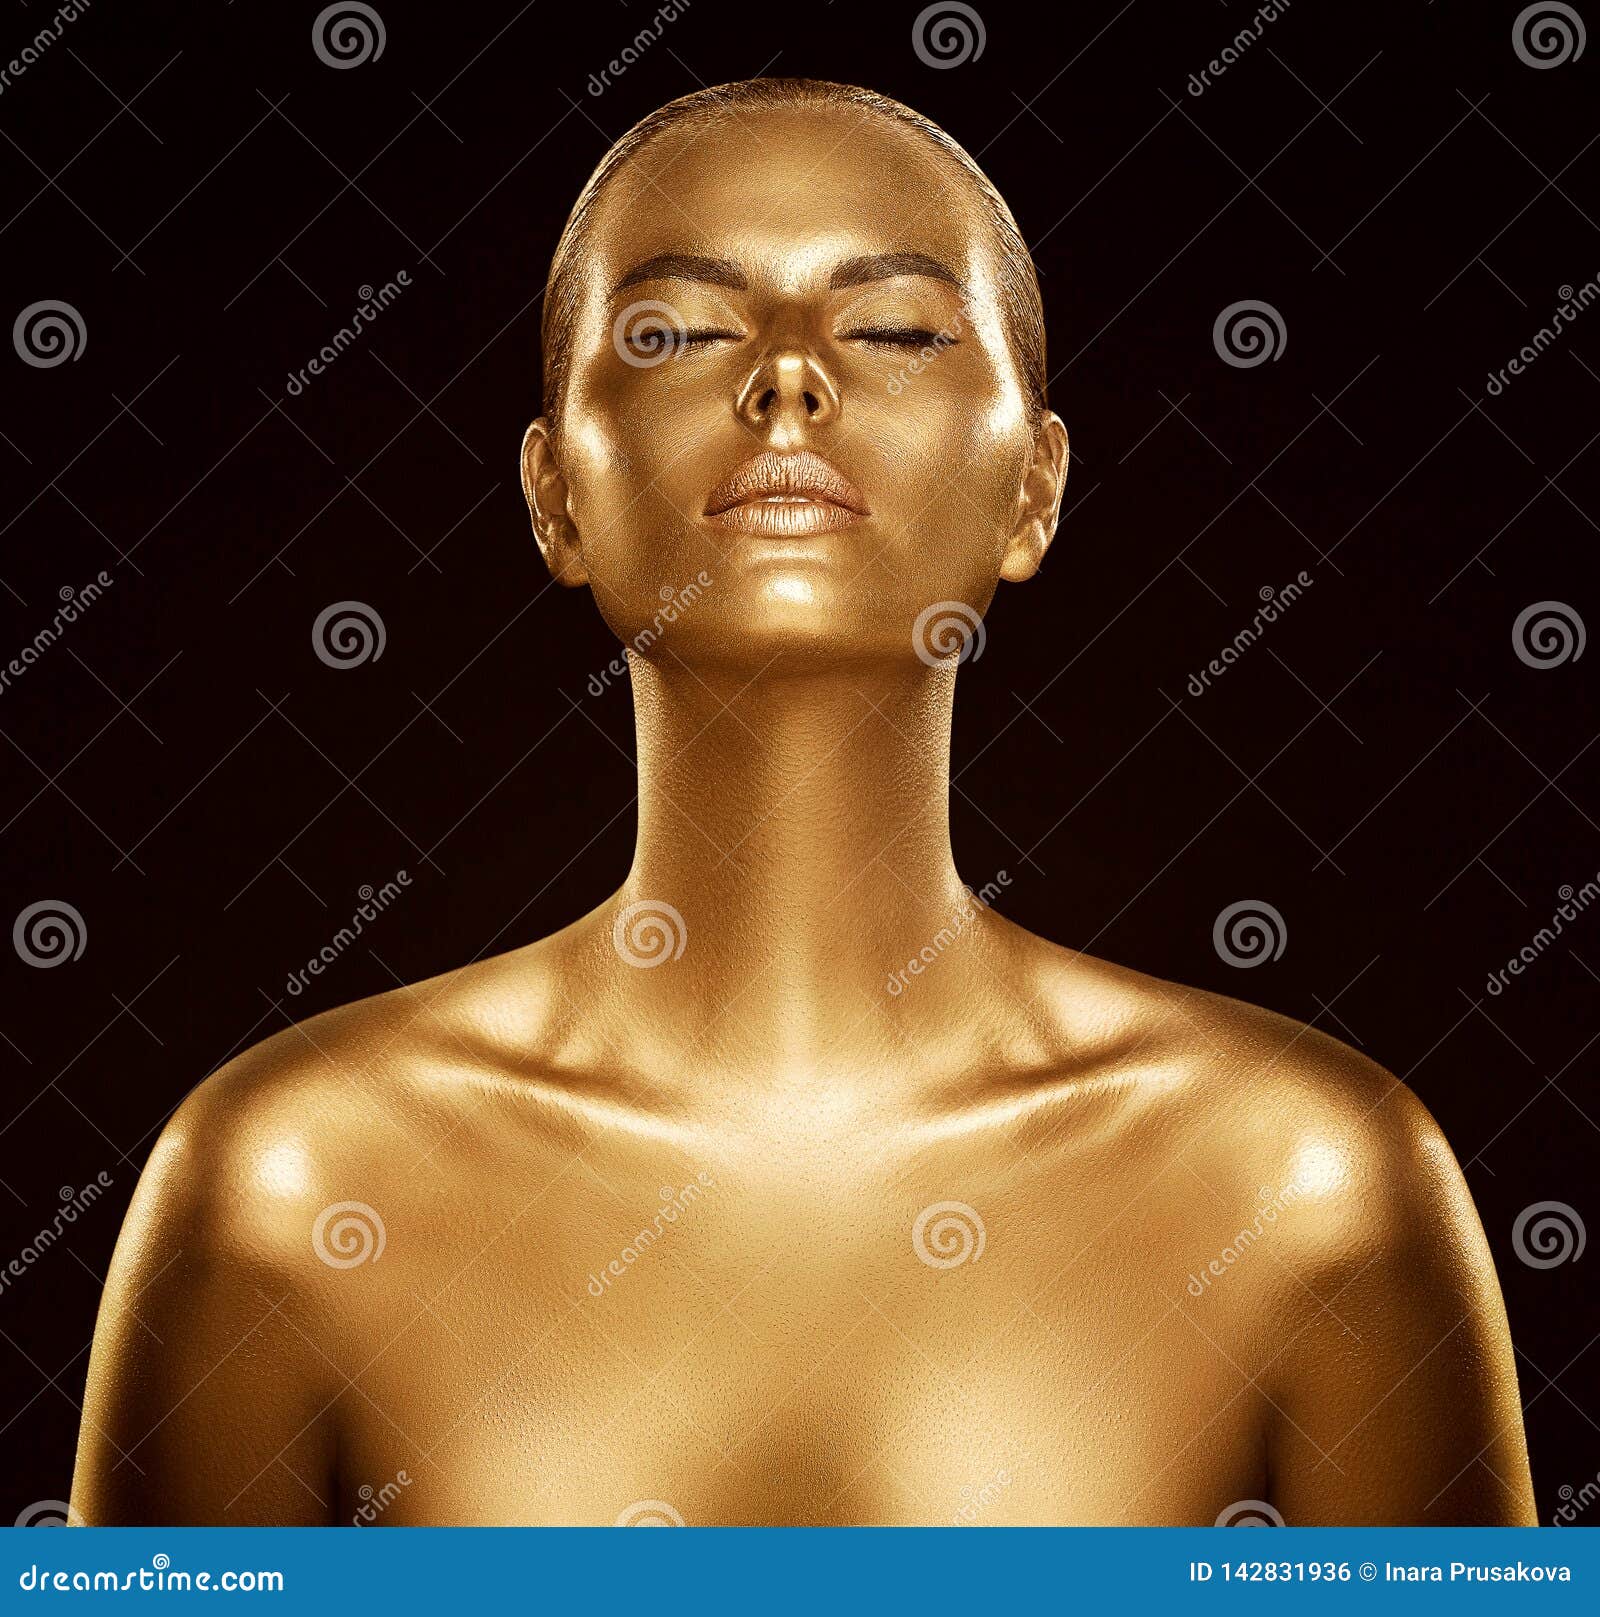 https://thumbs.dreamstime.com/z/woman-gold-skin-fashion-model-golden-body-art-beauty-portrait-face-body-shine-as-metal-studio-shot-black-background-woman-142831936.jpg